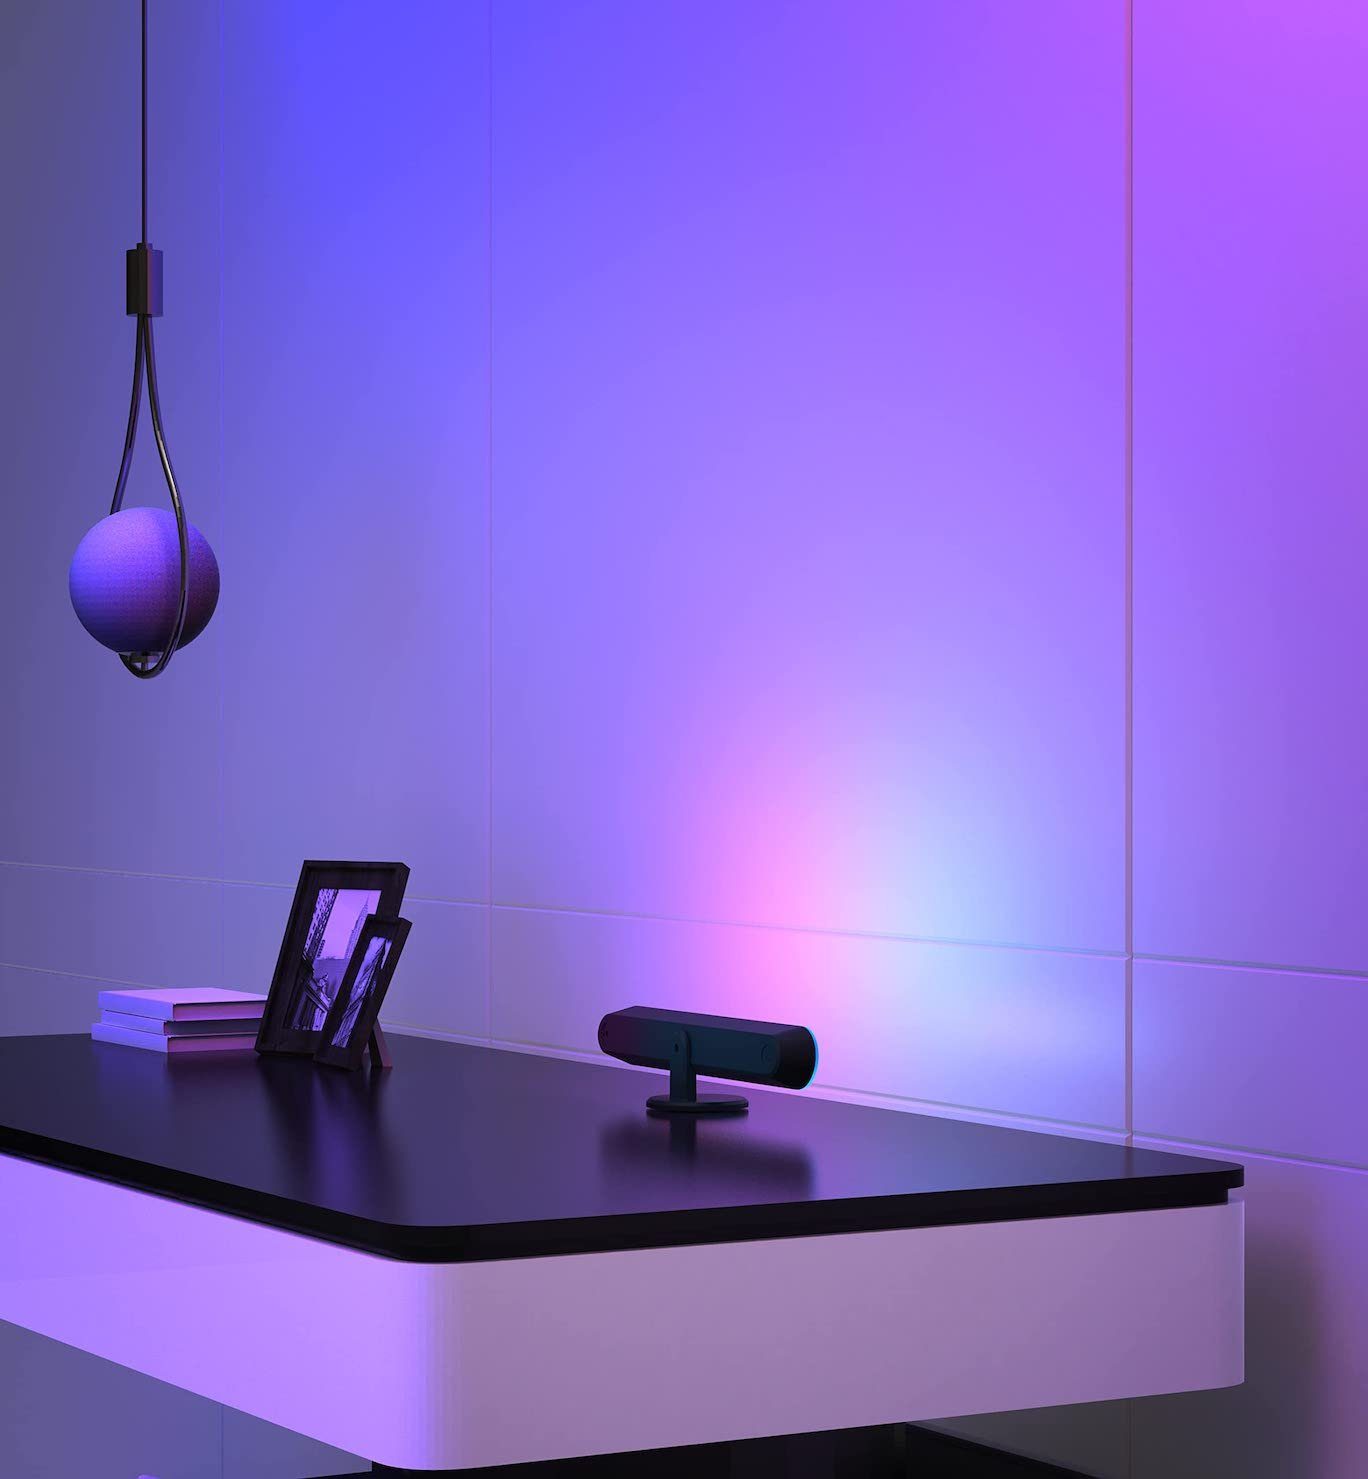 Woward 2er Smart RGB LED Music PC Lampe, TV Sync Smarte RGB Alexa Hintergrundleuchte Gaming